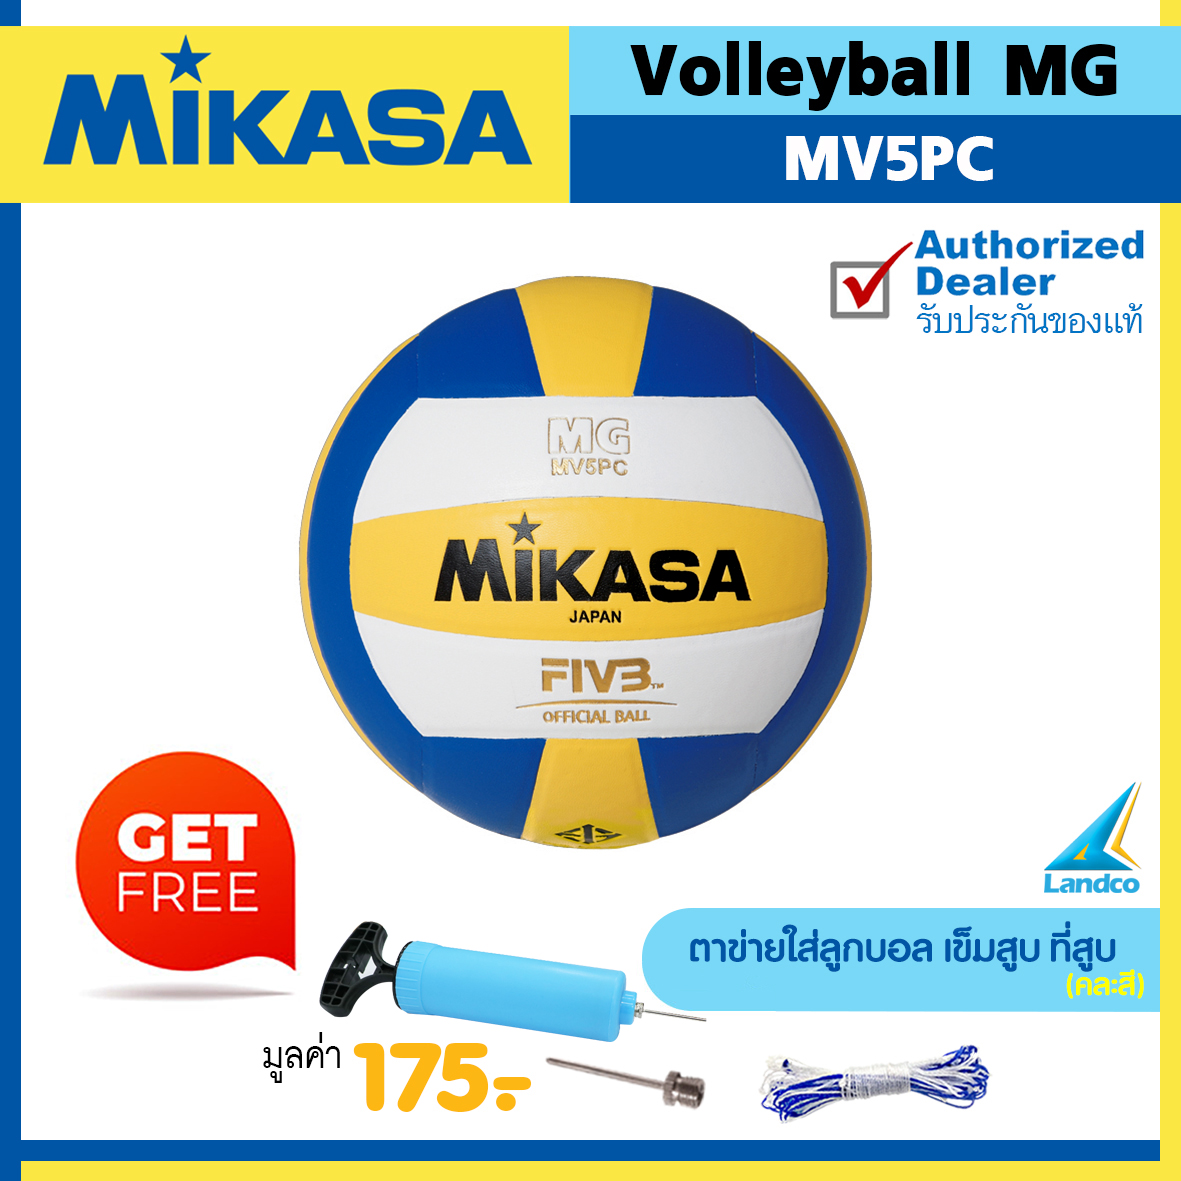 MIKASA ลูกวอลเลย์บอลหนังอัด Volleyball MV5PC เบอร์ 5 (แถมฟรี ตาข่ายใส่ลูกบอล + เข็มสูบ + สูบลมมือ SPL)